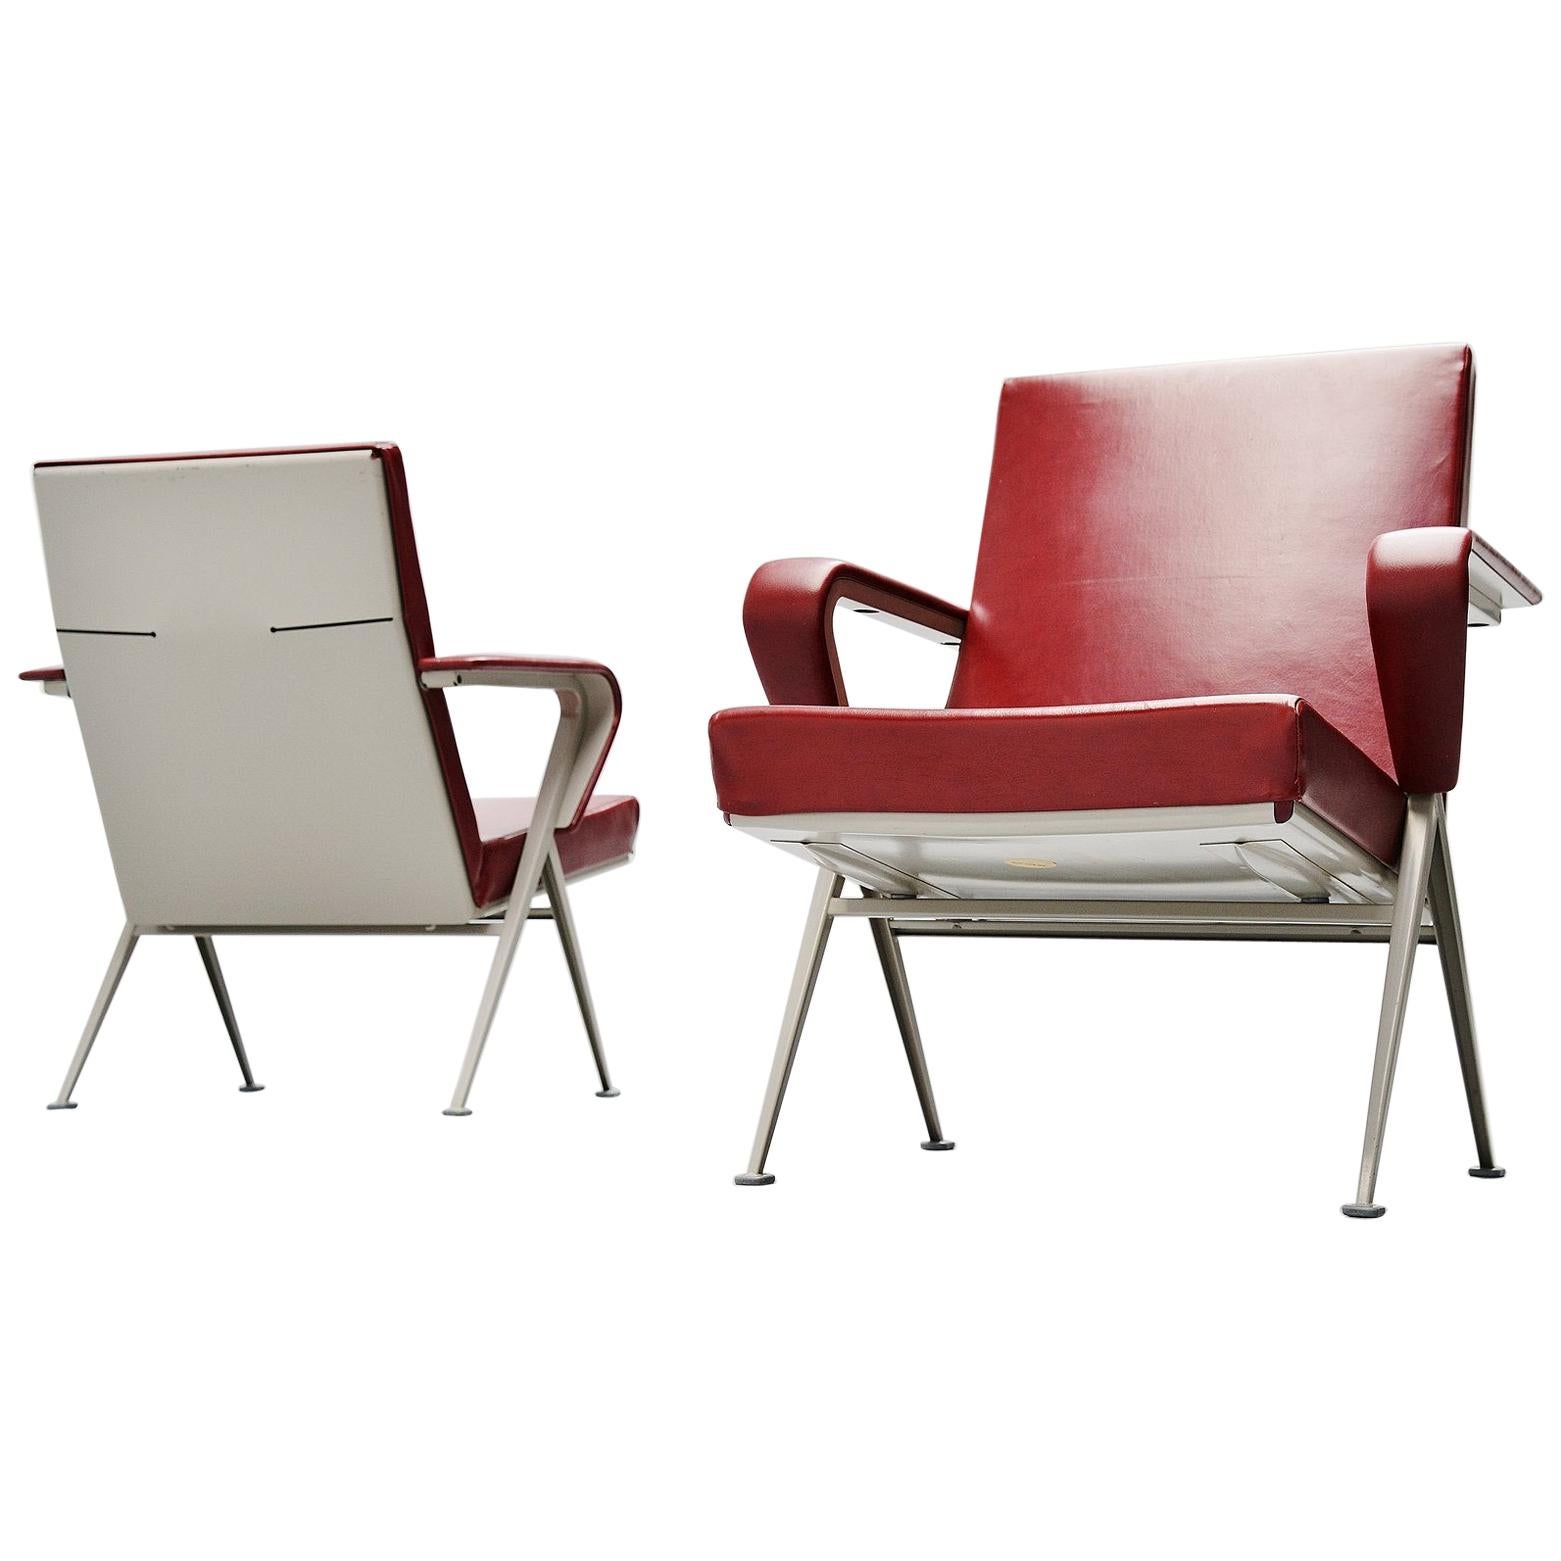 Repose Chairs Friso Kramer for Ahrend de Cirkel, 1959